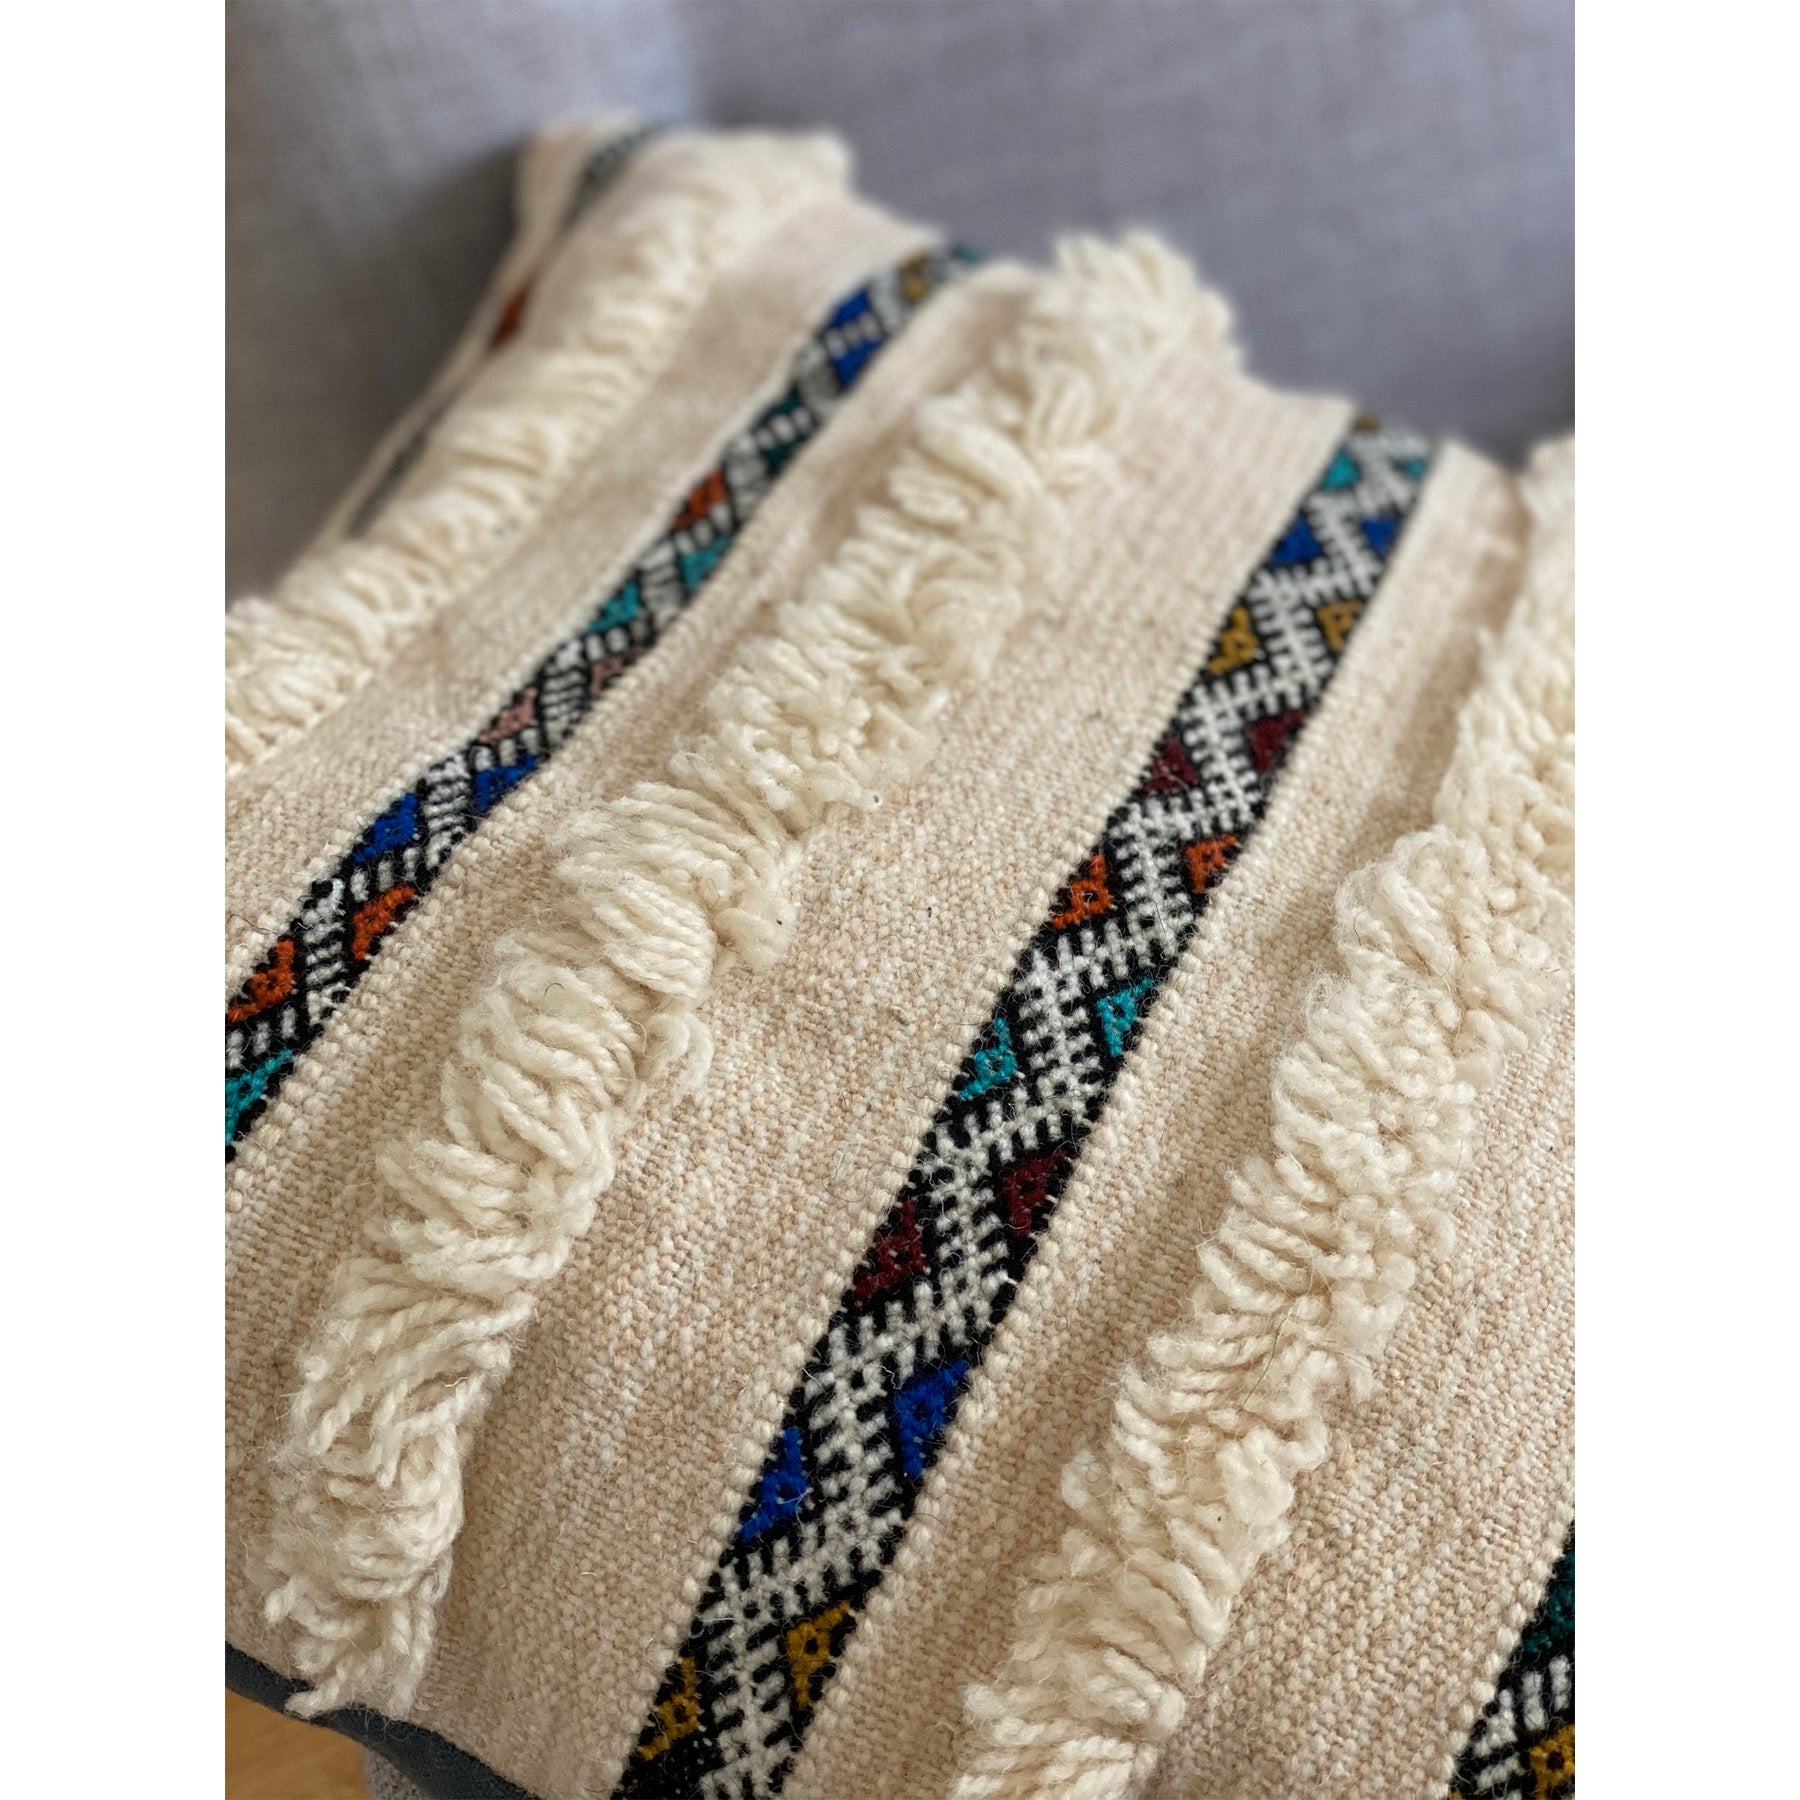 Closeup of Handira Moroccan wedding blanket pillow made by Kantara artisans in Morocco